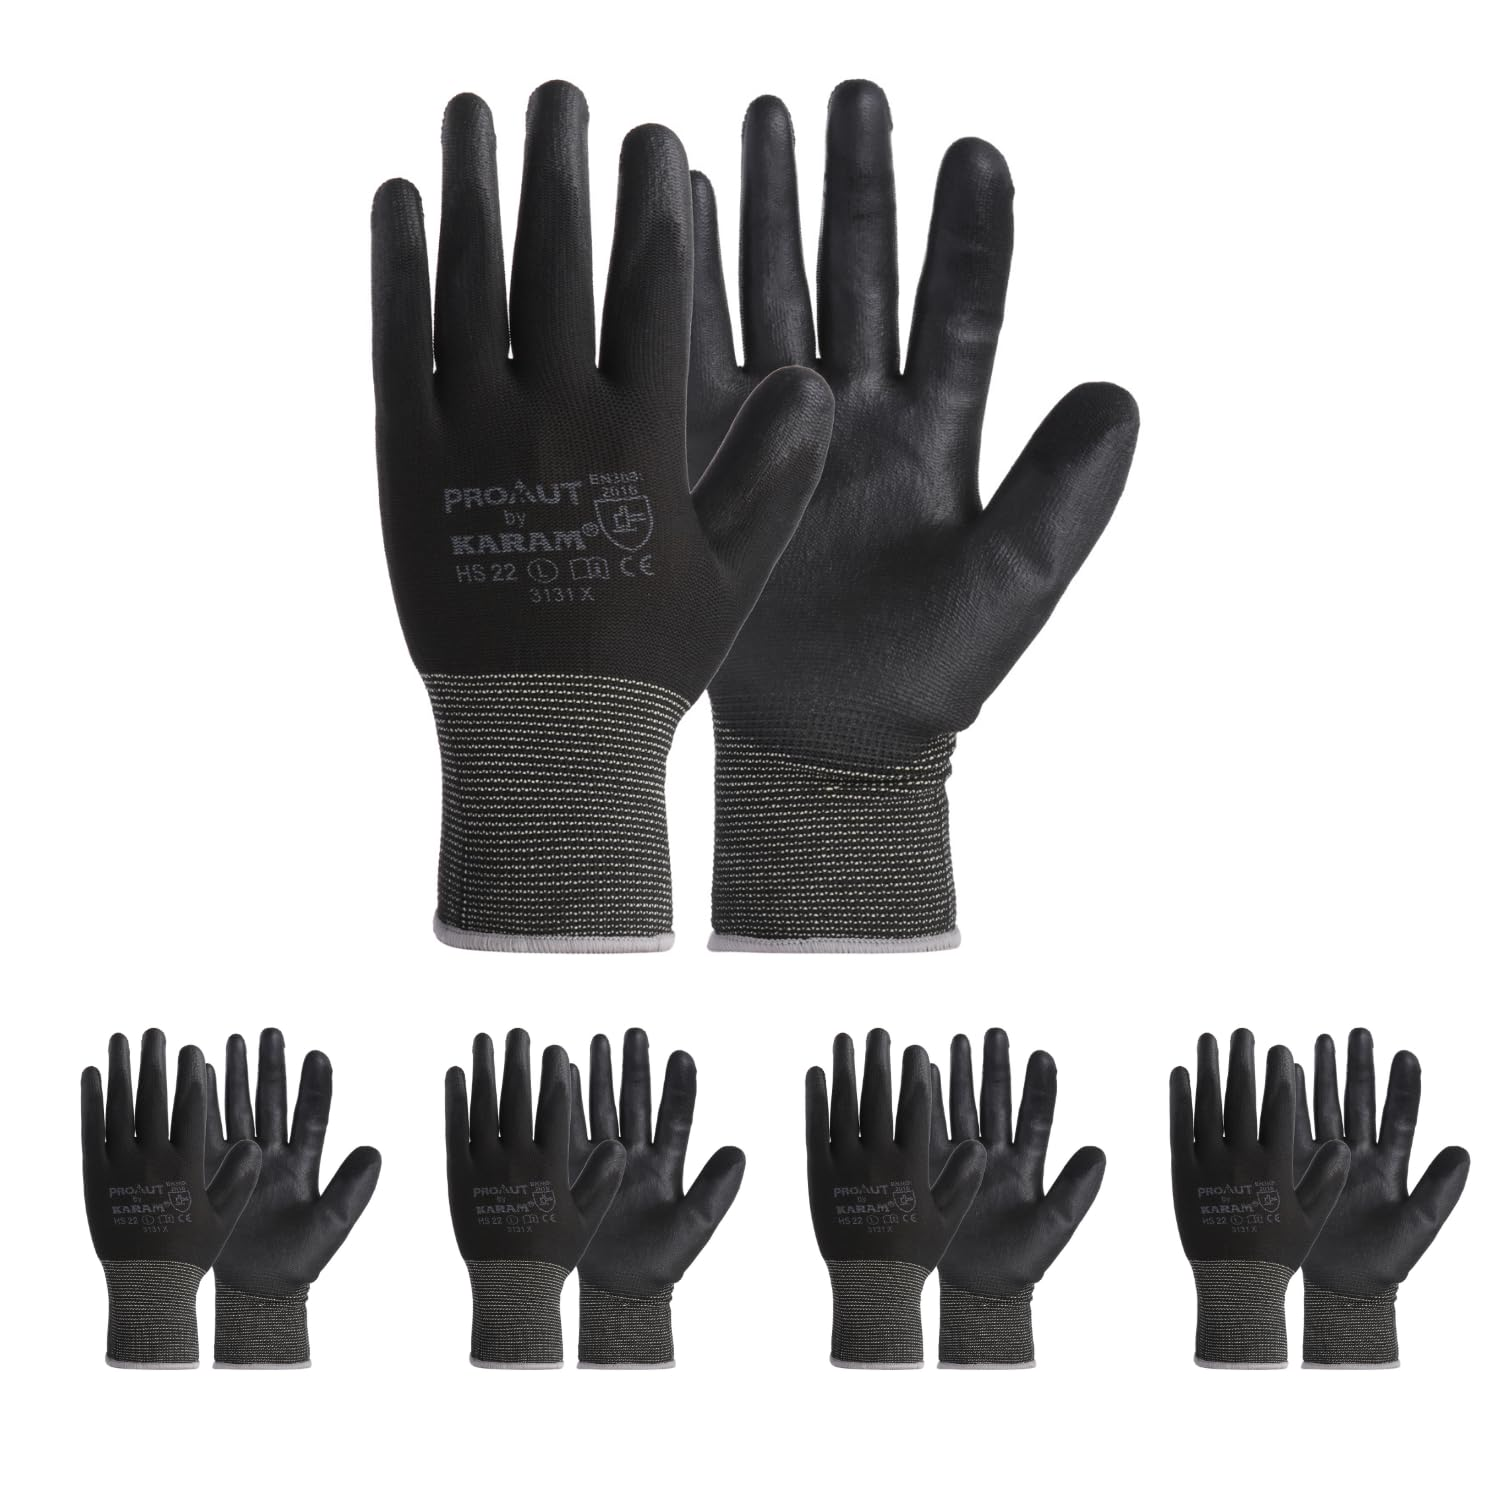 /storage/photos/1/karam new product/Karam Safety gloves HS 22 4.png